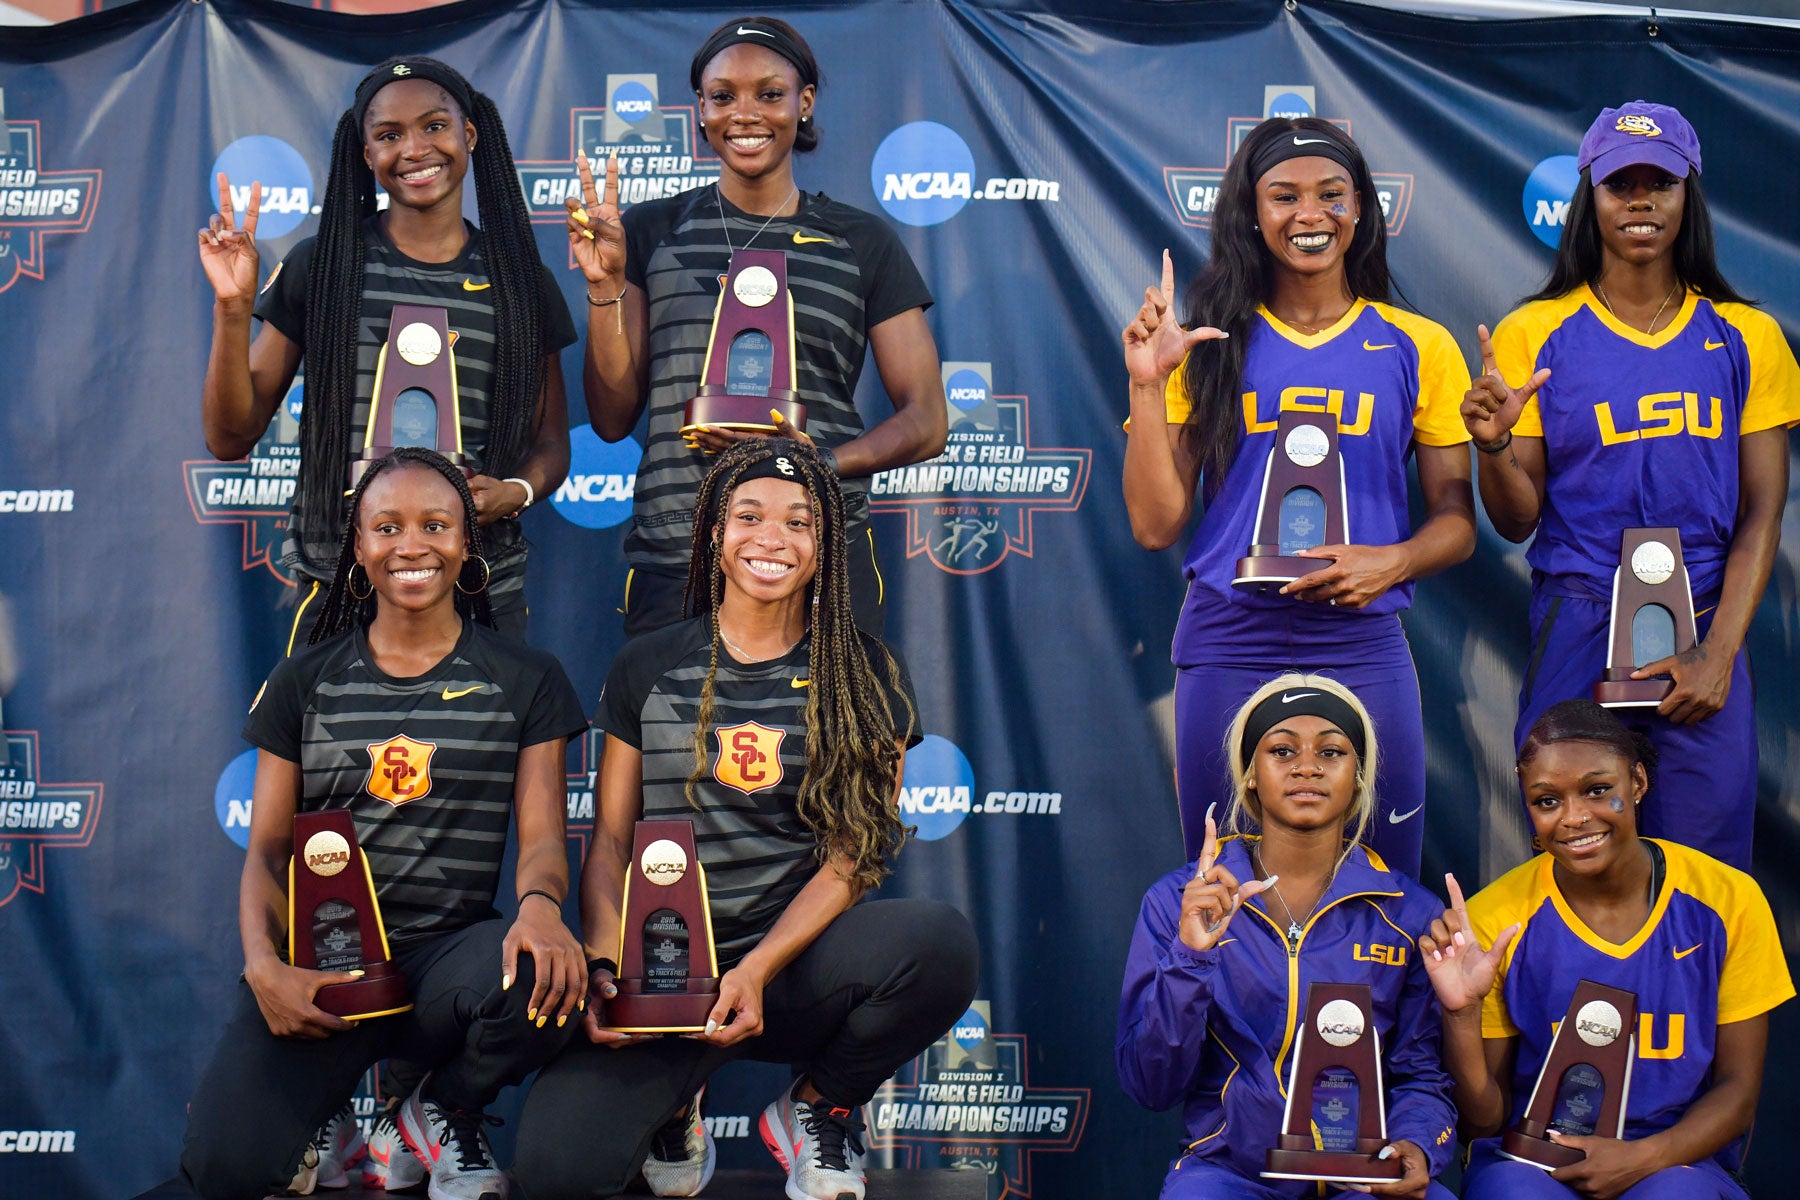 Women's track standouts 2019 USC 